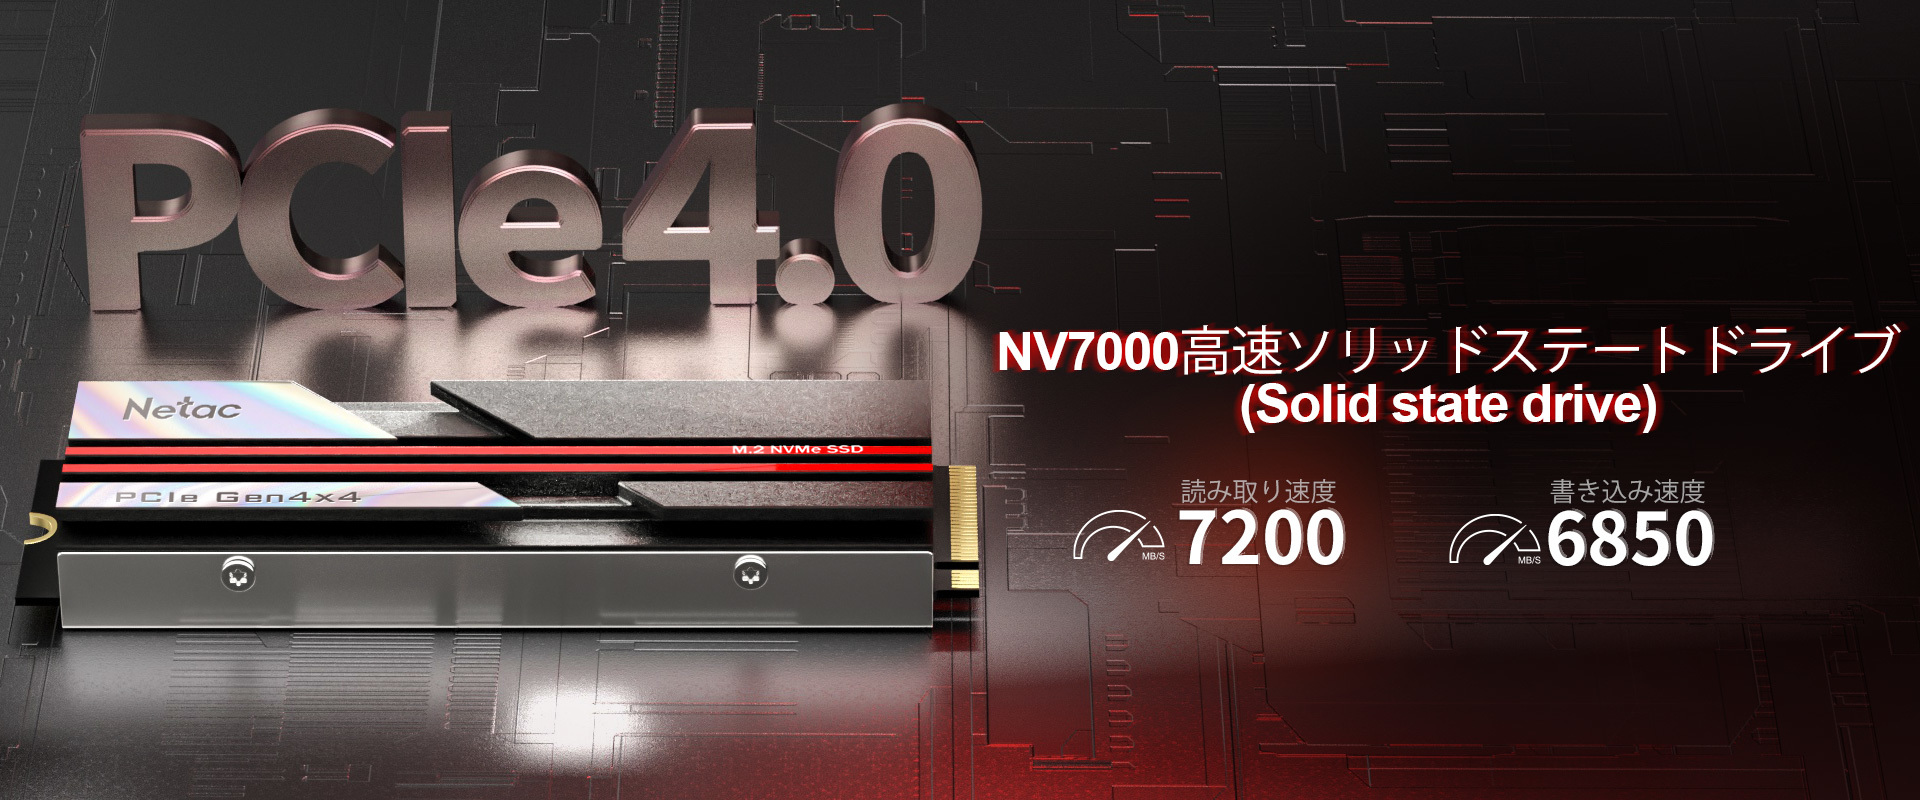 NV7000高速ソリッドステートドライブ(Solid state drive)